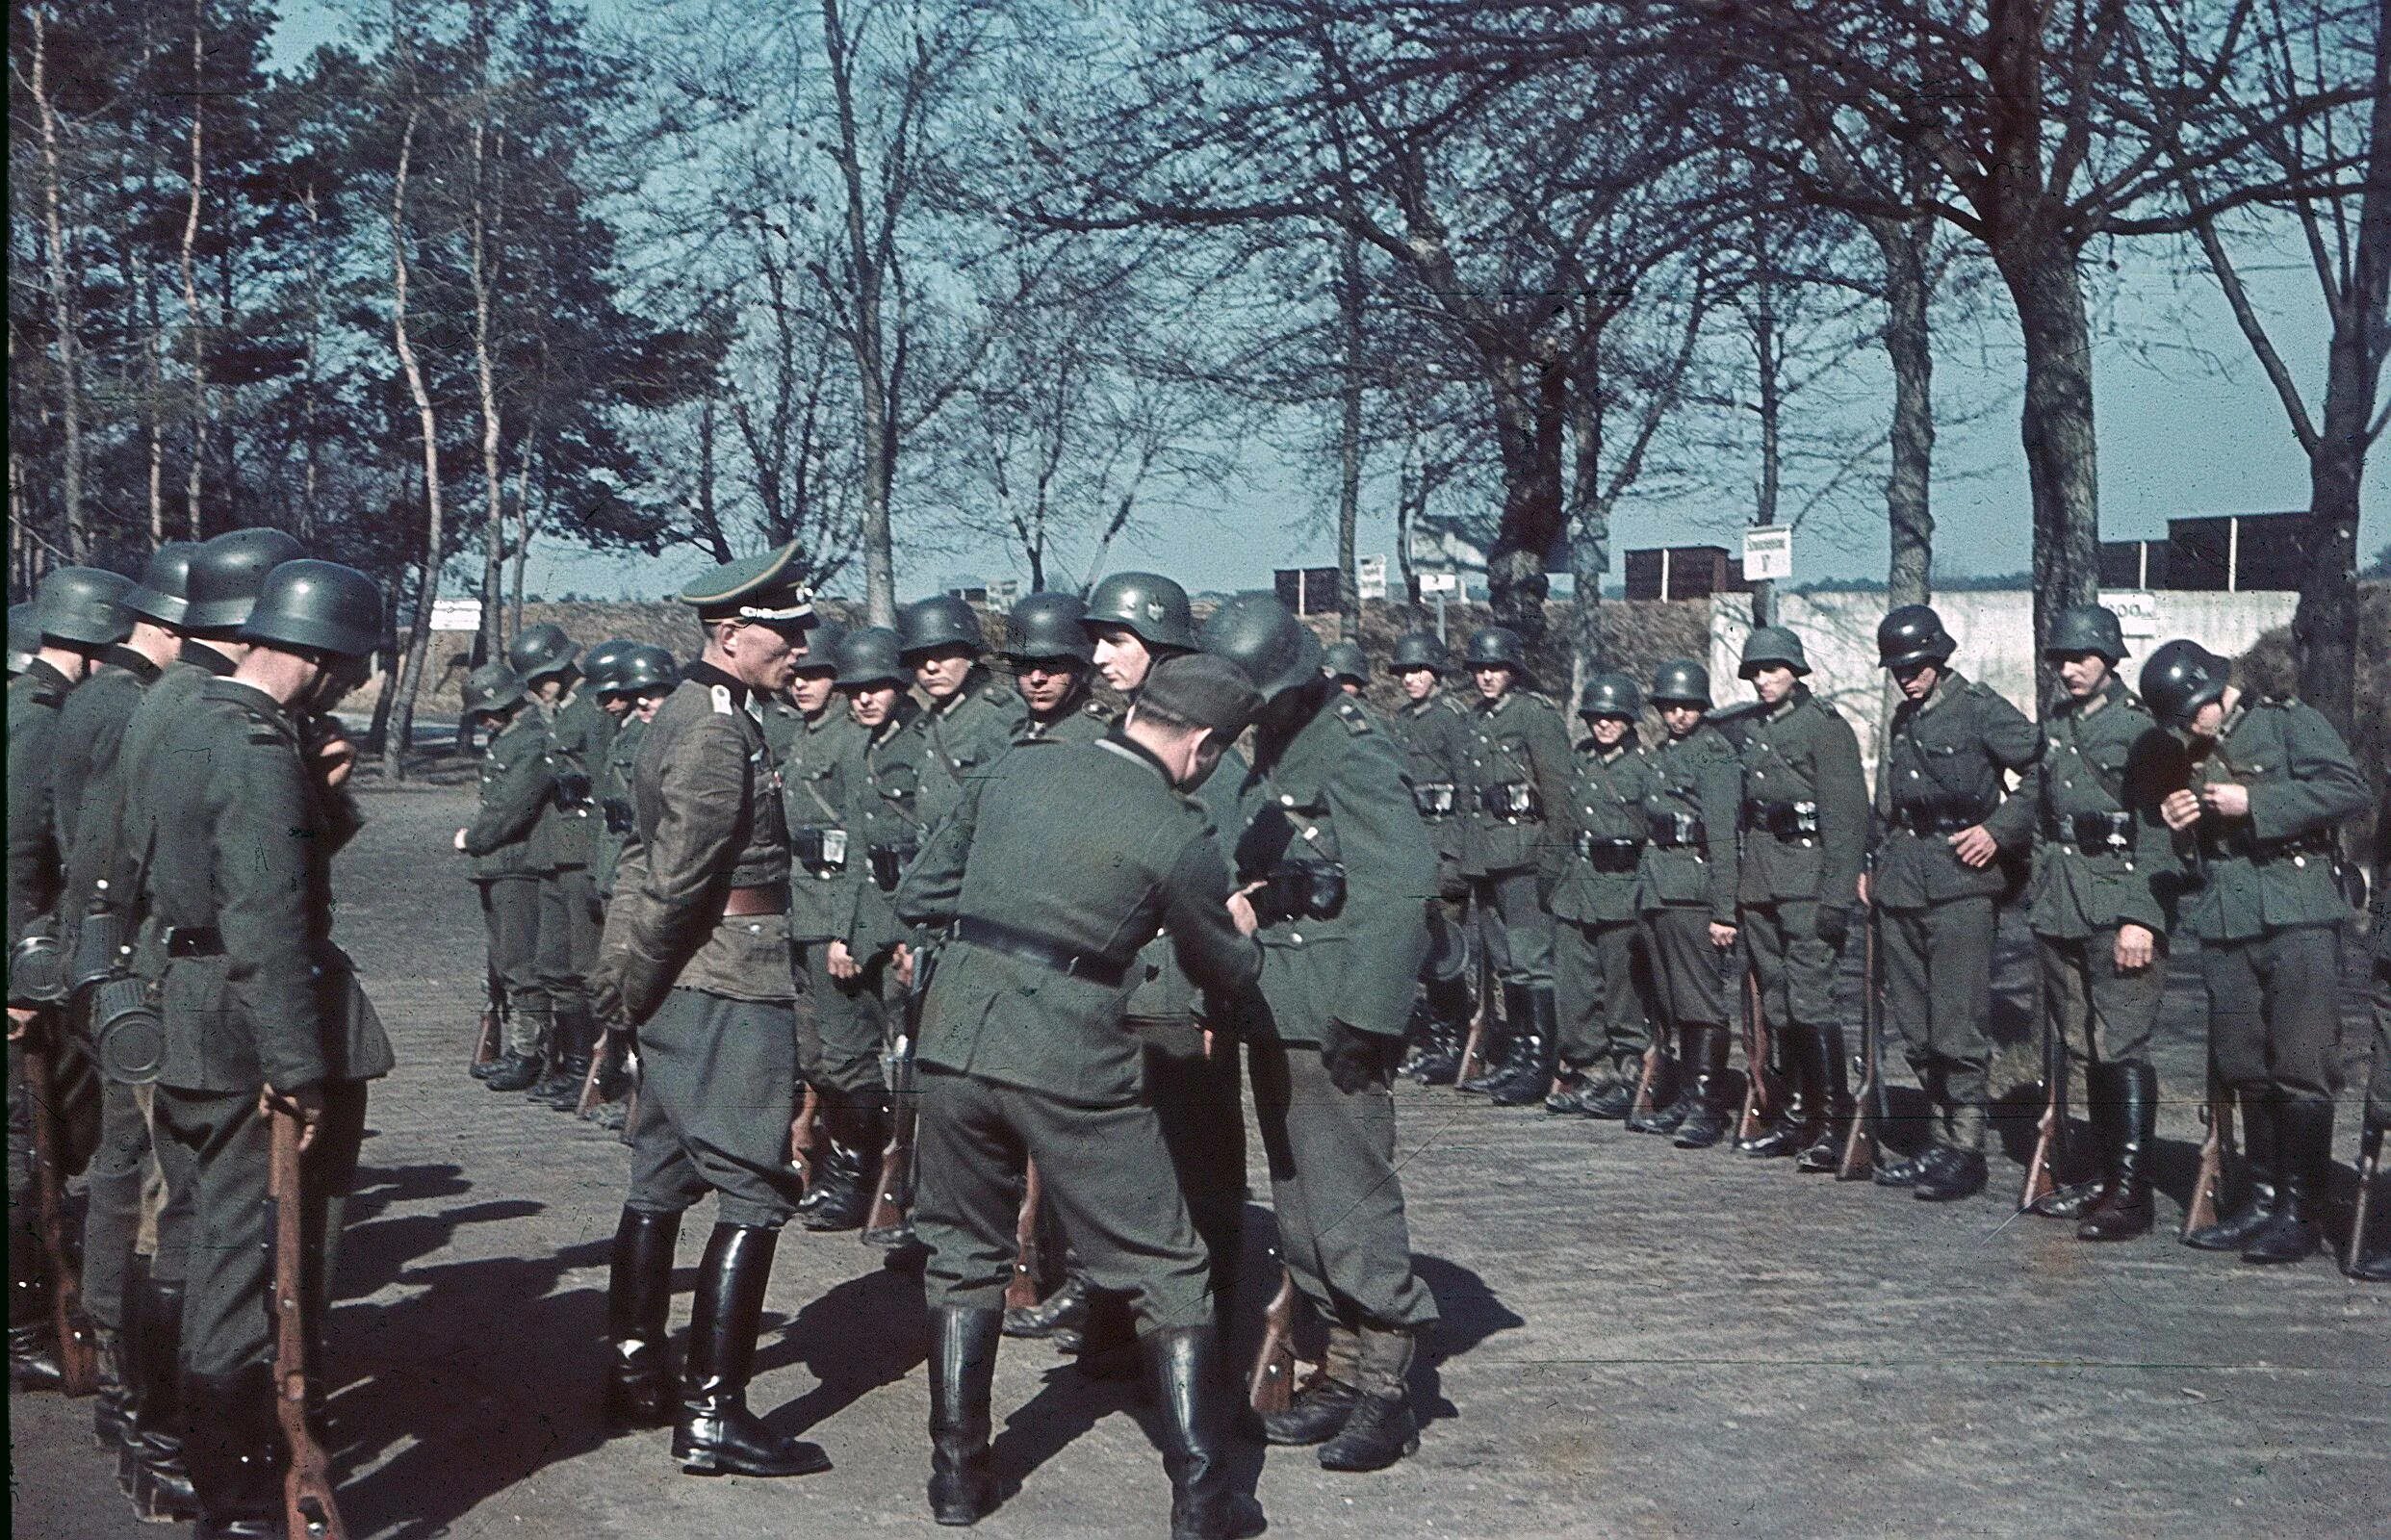 Начало сс. Солдаты 2 рейха. Немецкая армия Вермахт. Солдат СС Вермахт в цвете. Немецкая армия Вермахт новобранцы.